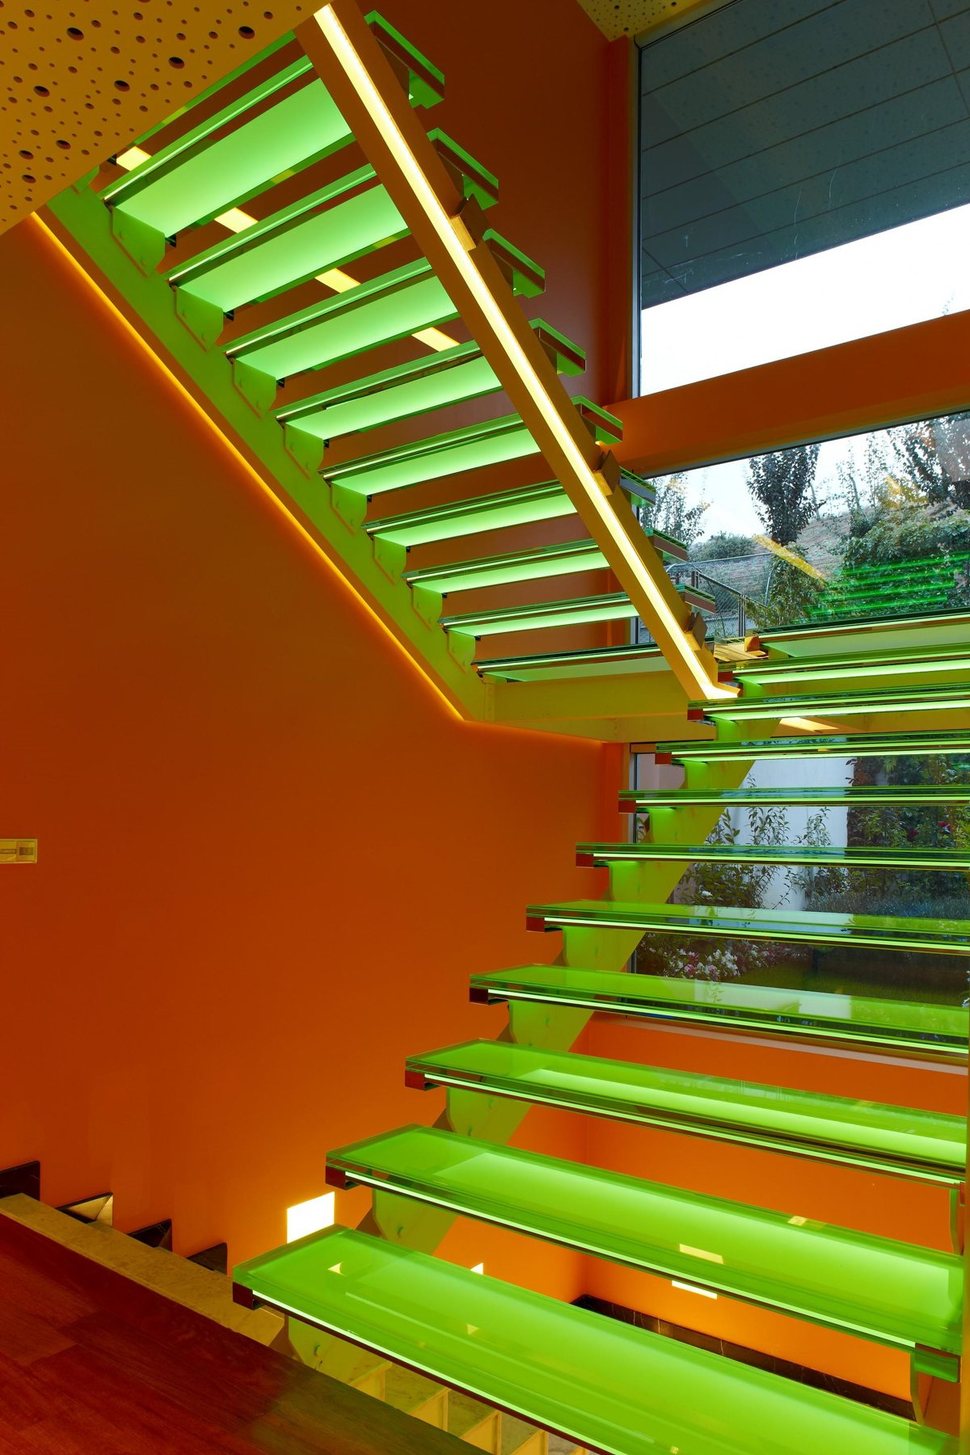 ultramodern-house-with-vibrant-lighting-design-focus-12-stairs-green.jpg